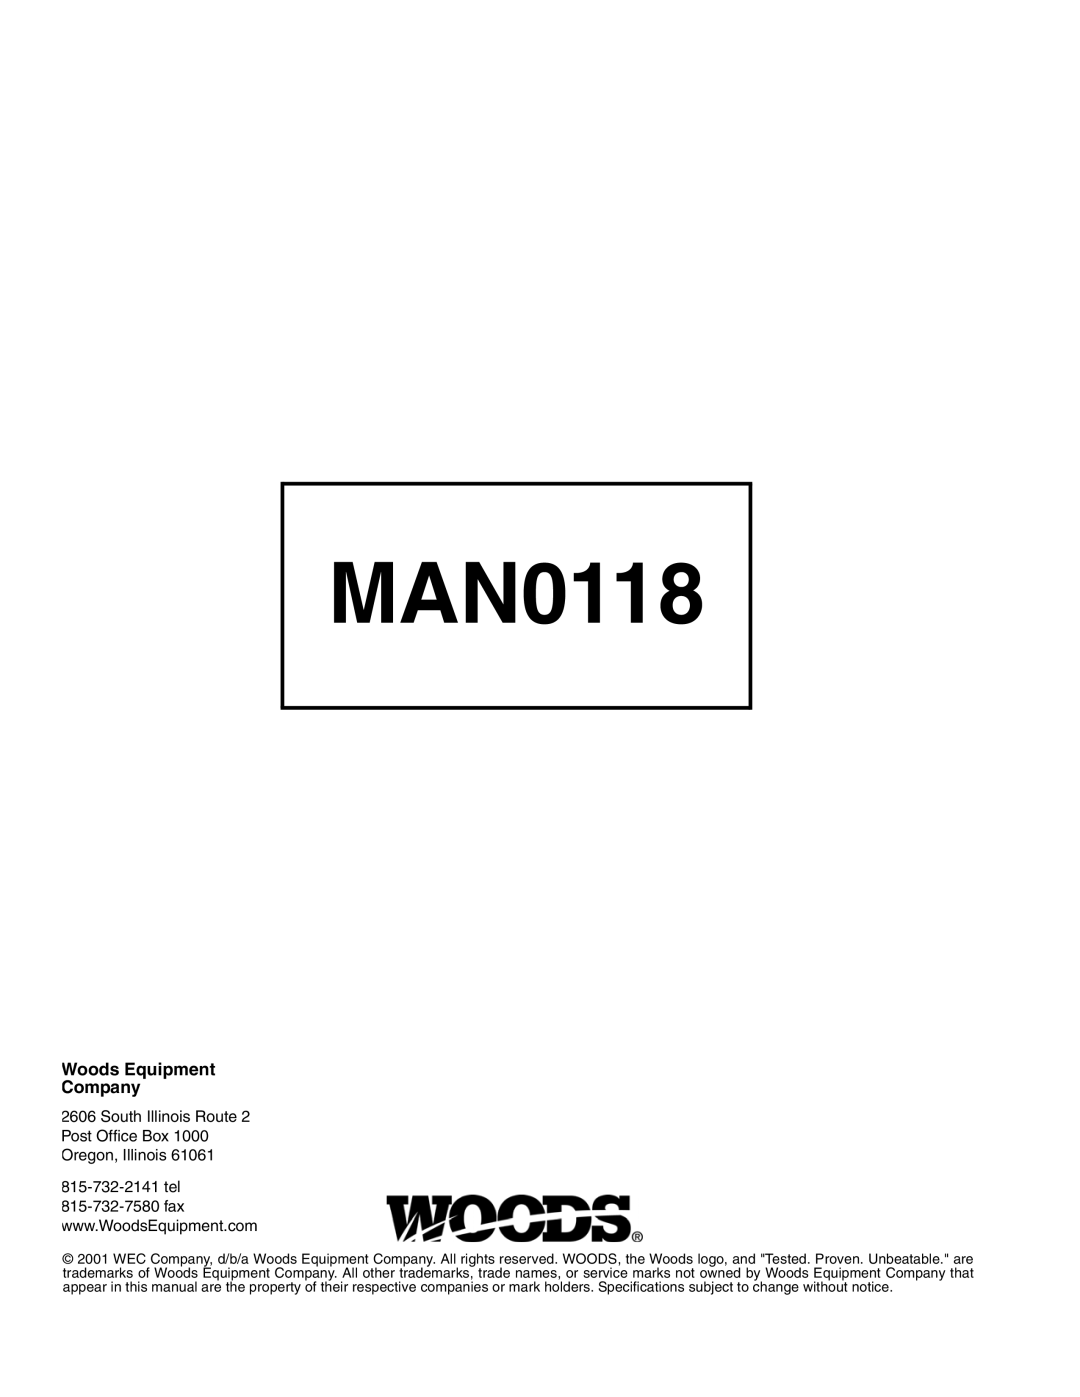 Woods Equipment FSW6000T, FSW6000F manual MAN0118, Woods Equipment Company 